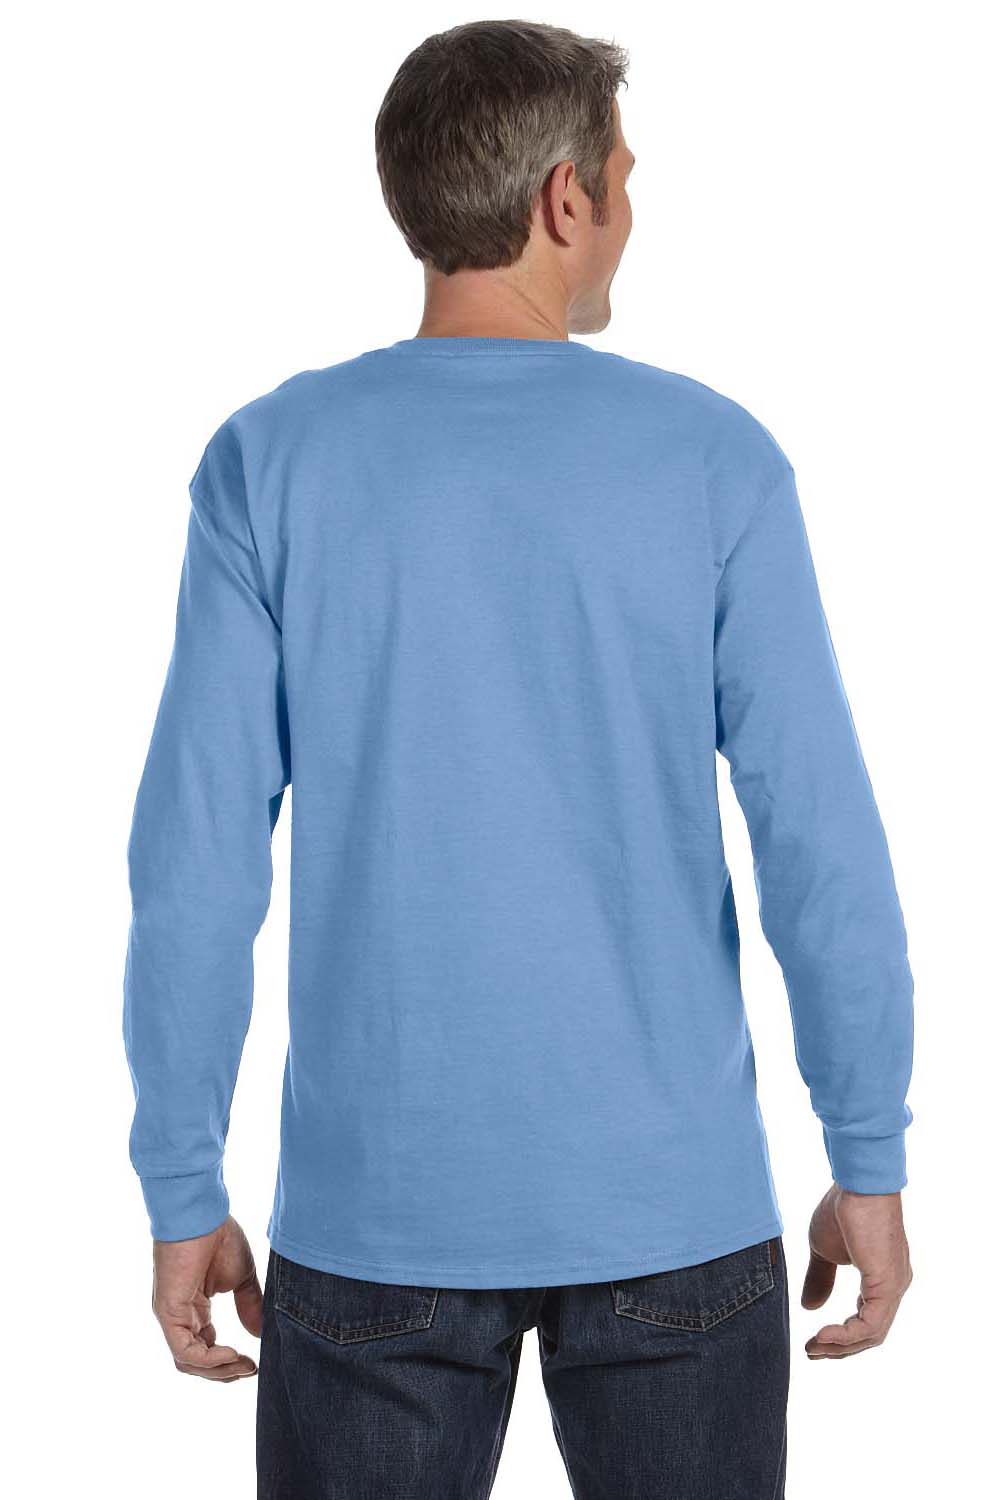 Gildan G540 Mens Long Sleeve Crewneck T-Shirt Carolina Blue Back